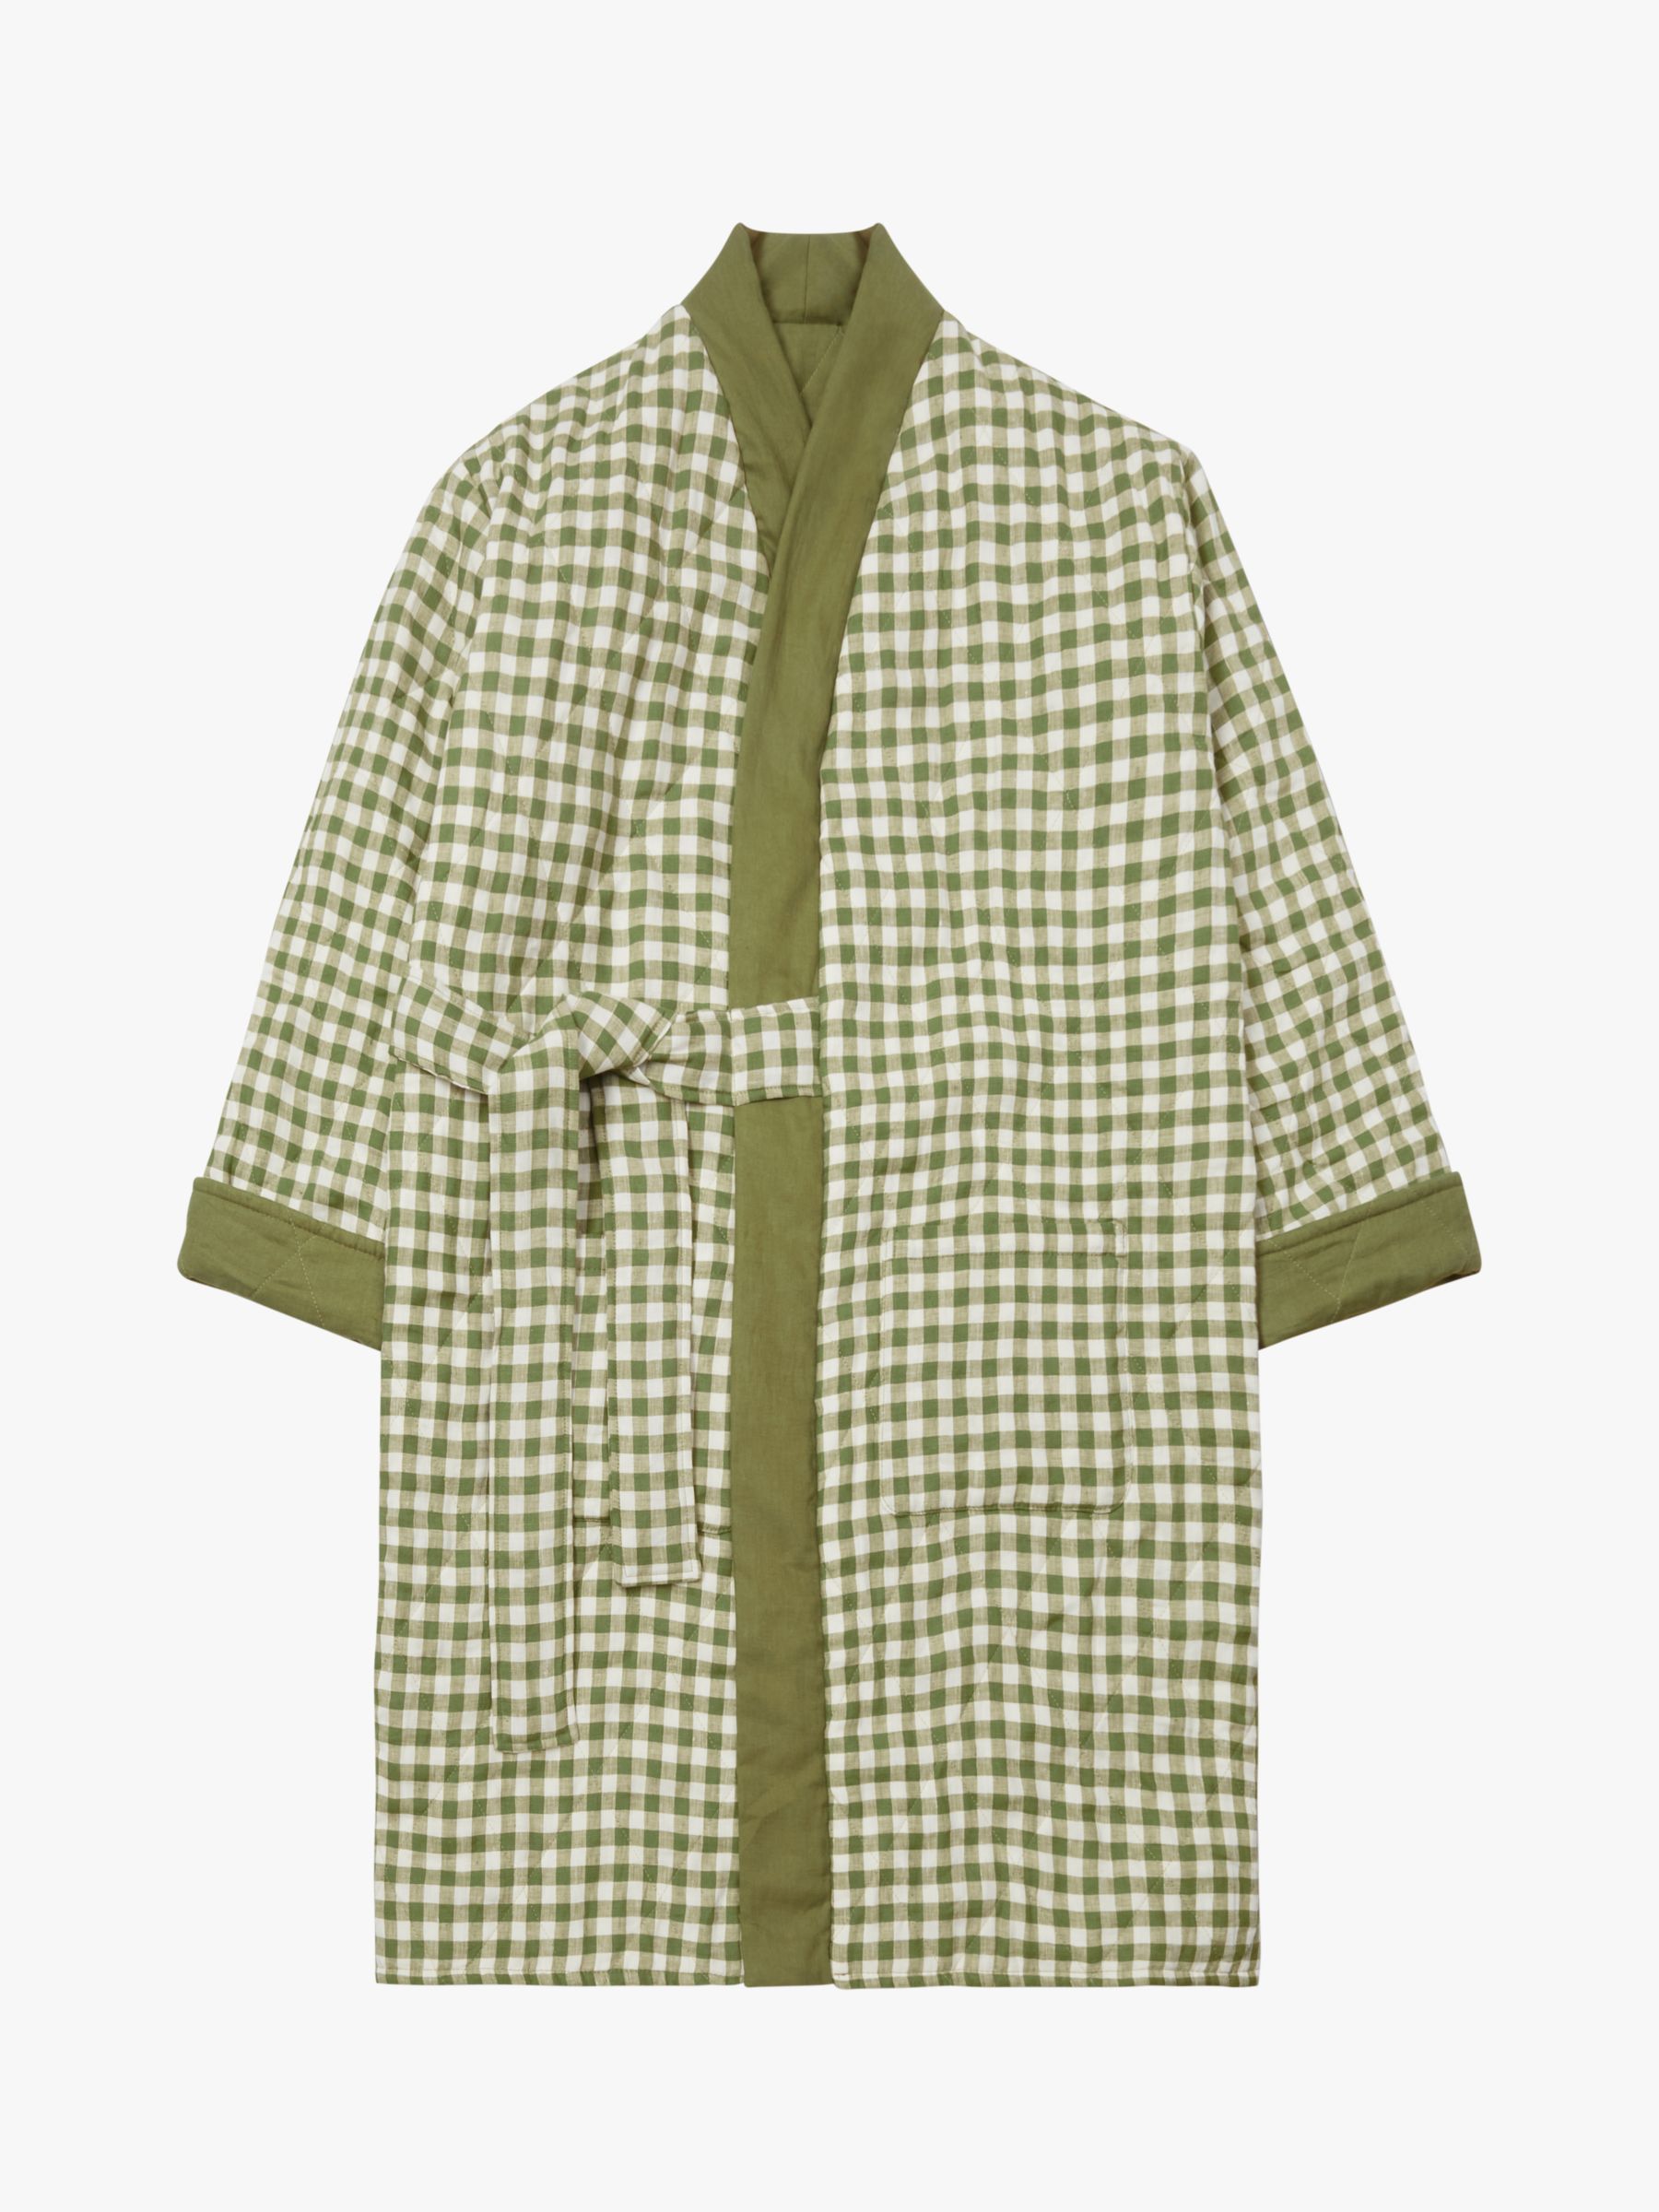 Piglet in Bed Reversible Gingham Linen Housecoat Dressing Gown, Botanical, S-M